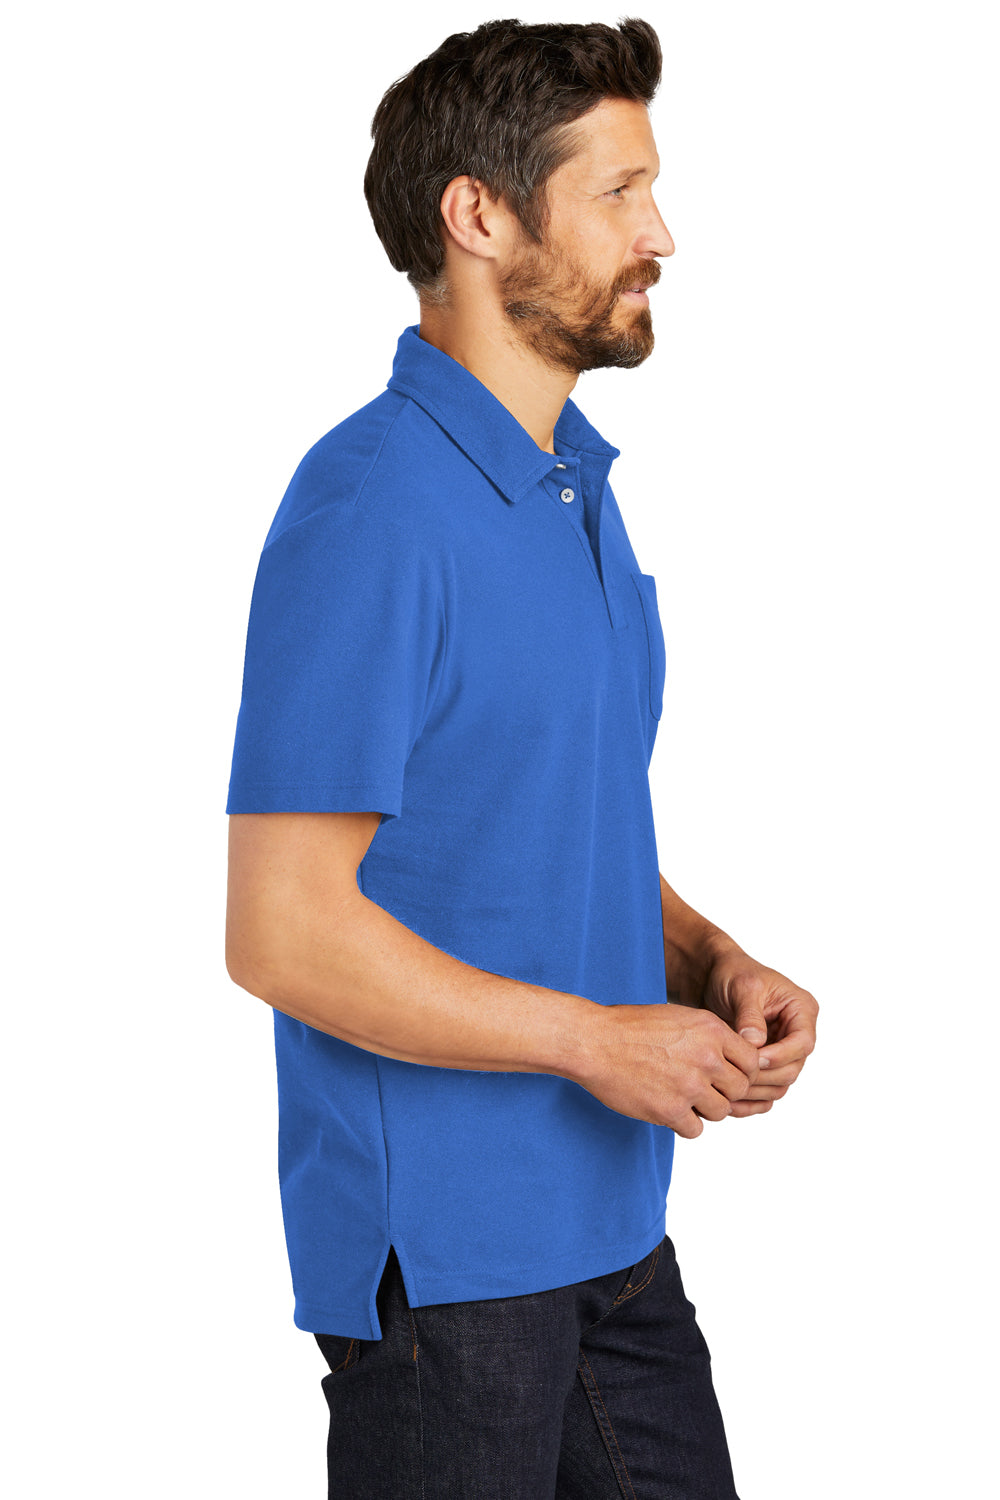 Port Authority K868 Mens C-FREE Pique Short Sleeve Polo Shirt w/ Pocket True Blue Side